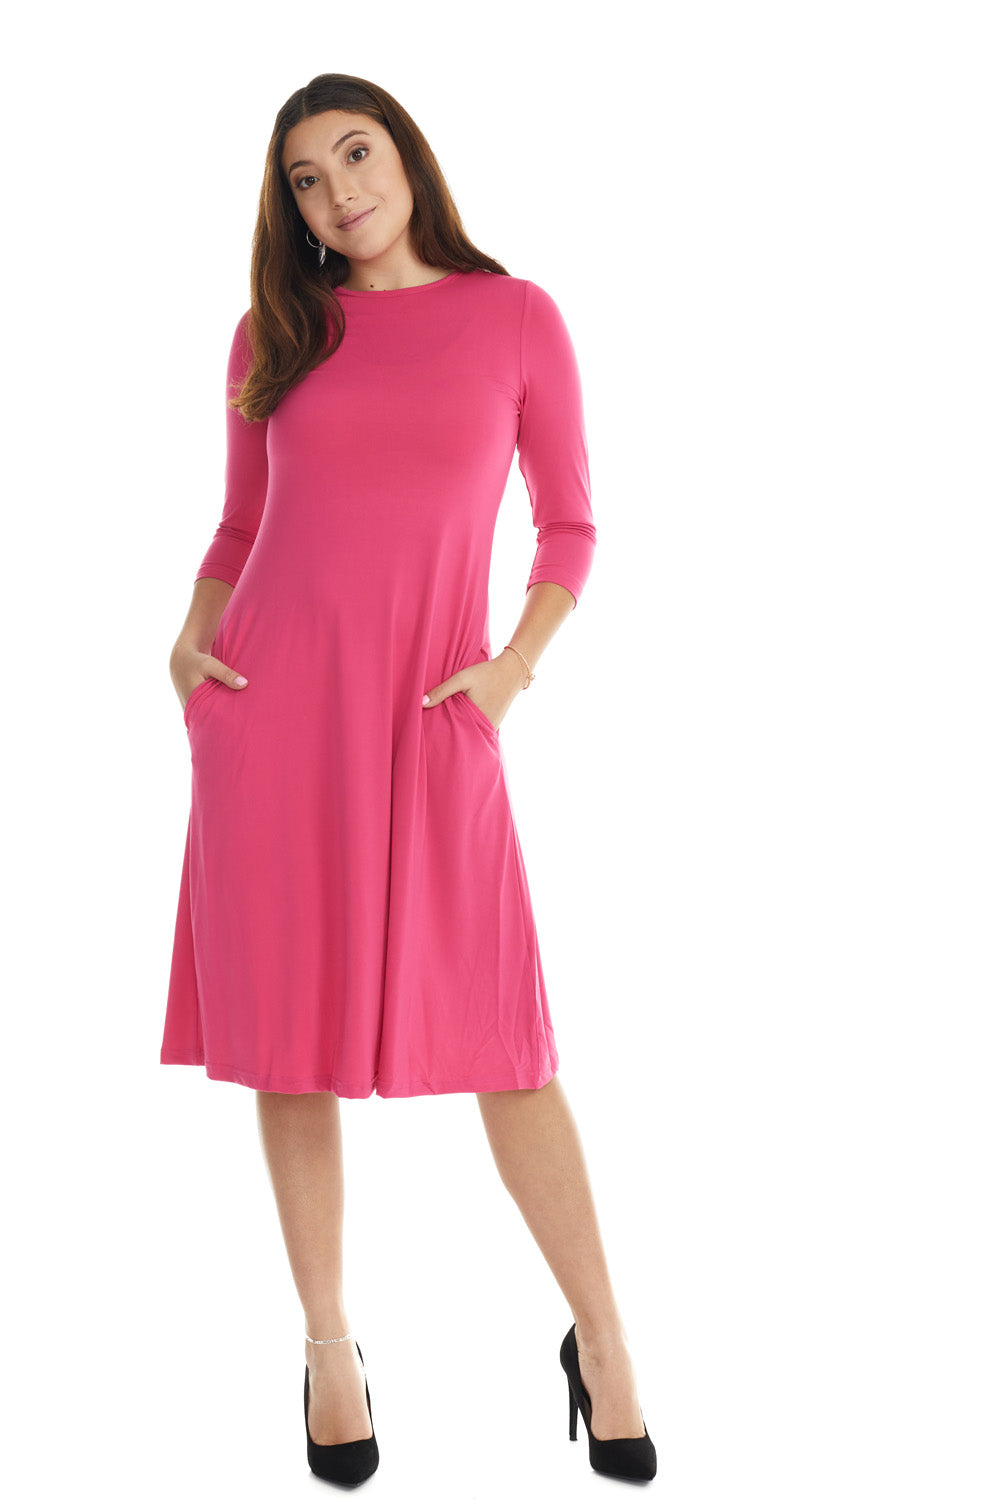 fuchsia pink flary below knee length 3/4 sleeve crew neck modest tznius a-line dress with pockets